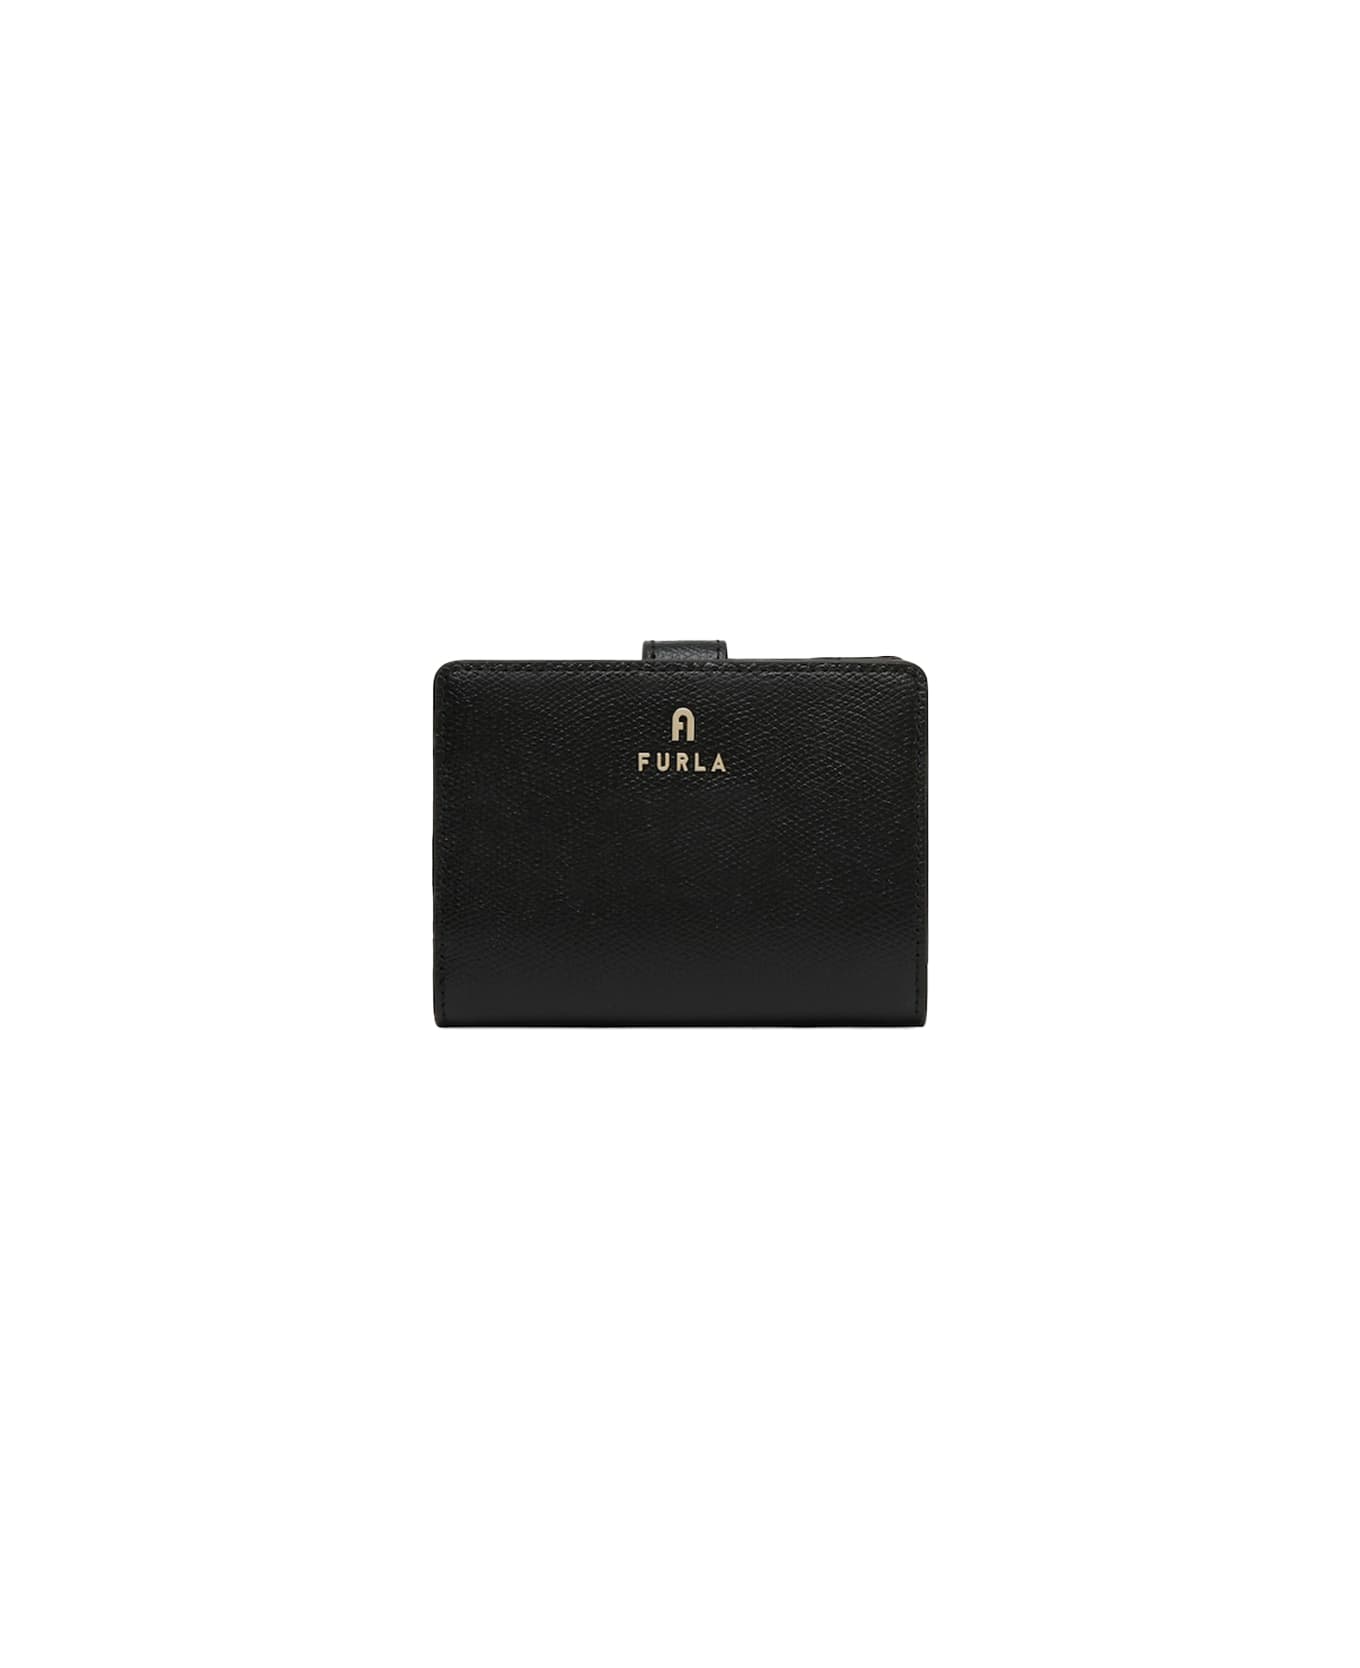 Furla Camelia S Compact Black Leather Wallet - NERO